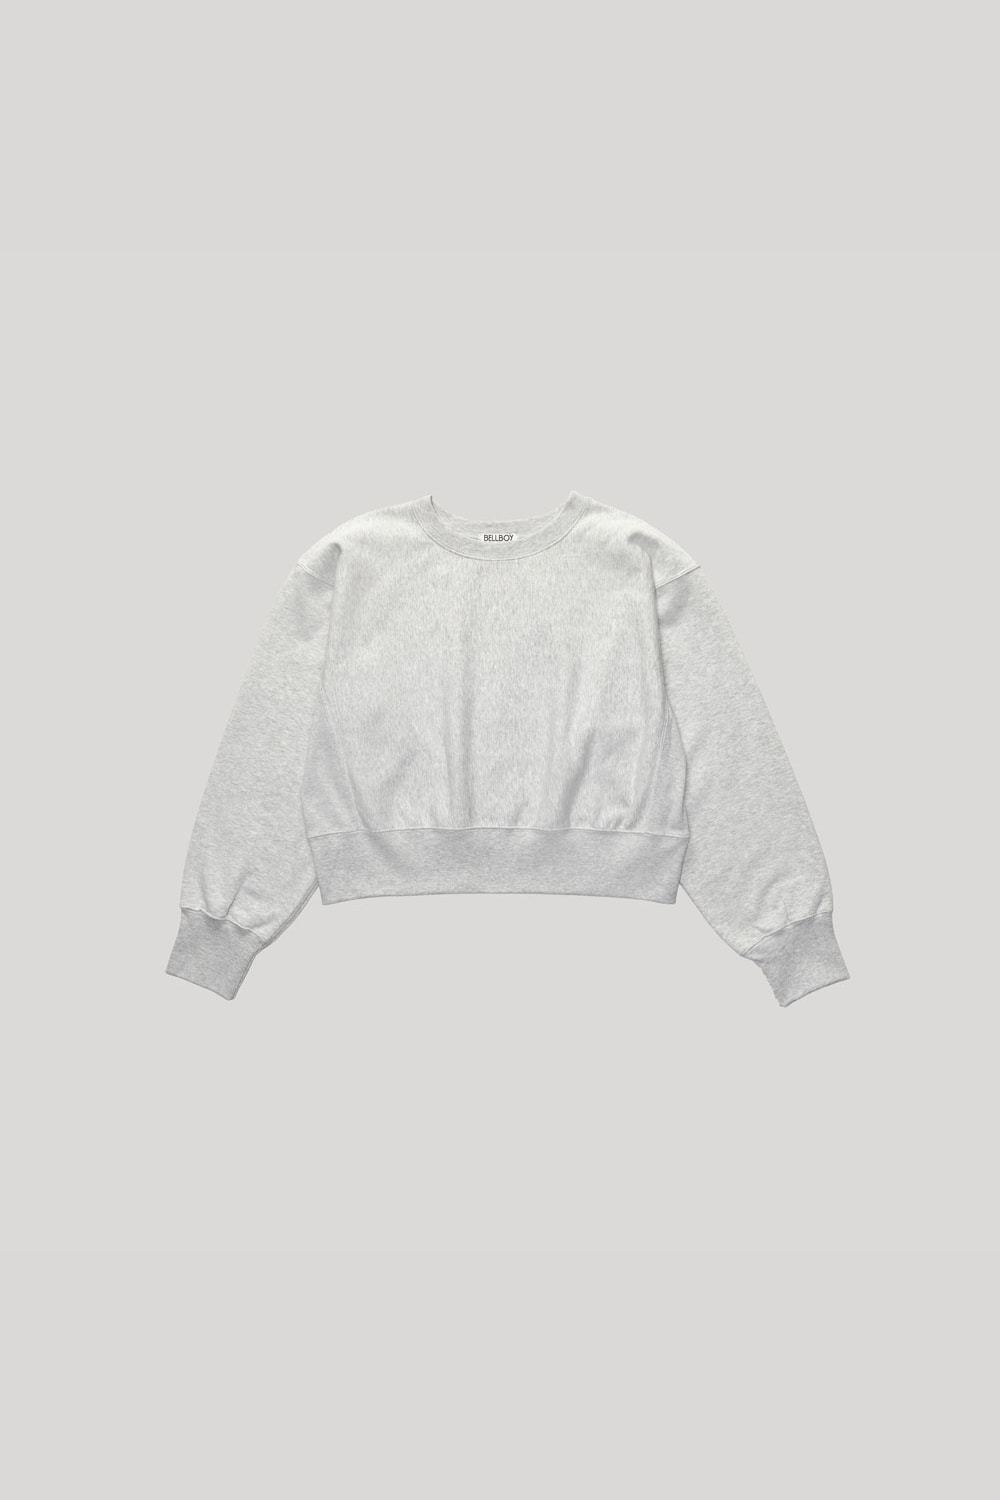 70&#039;s Sweatshirts - Sprinter (Cropped) 티셔츠, 워시드 헤비웨이트 티셔츠, 옥스포드셔츠, 버튼다운셔츠, 메신저백, 캔버스백